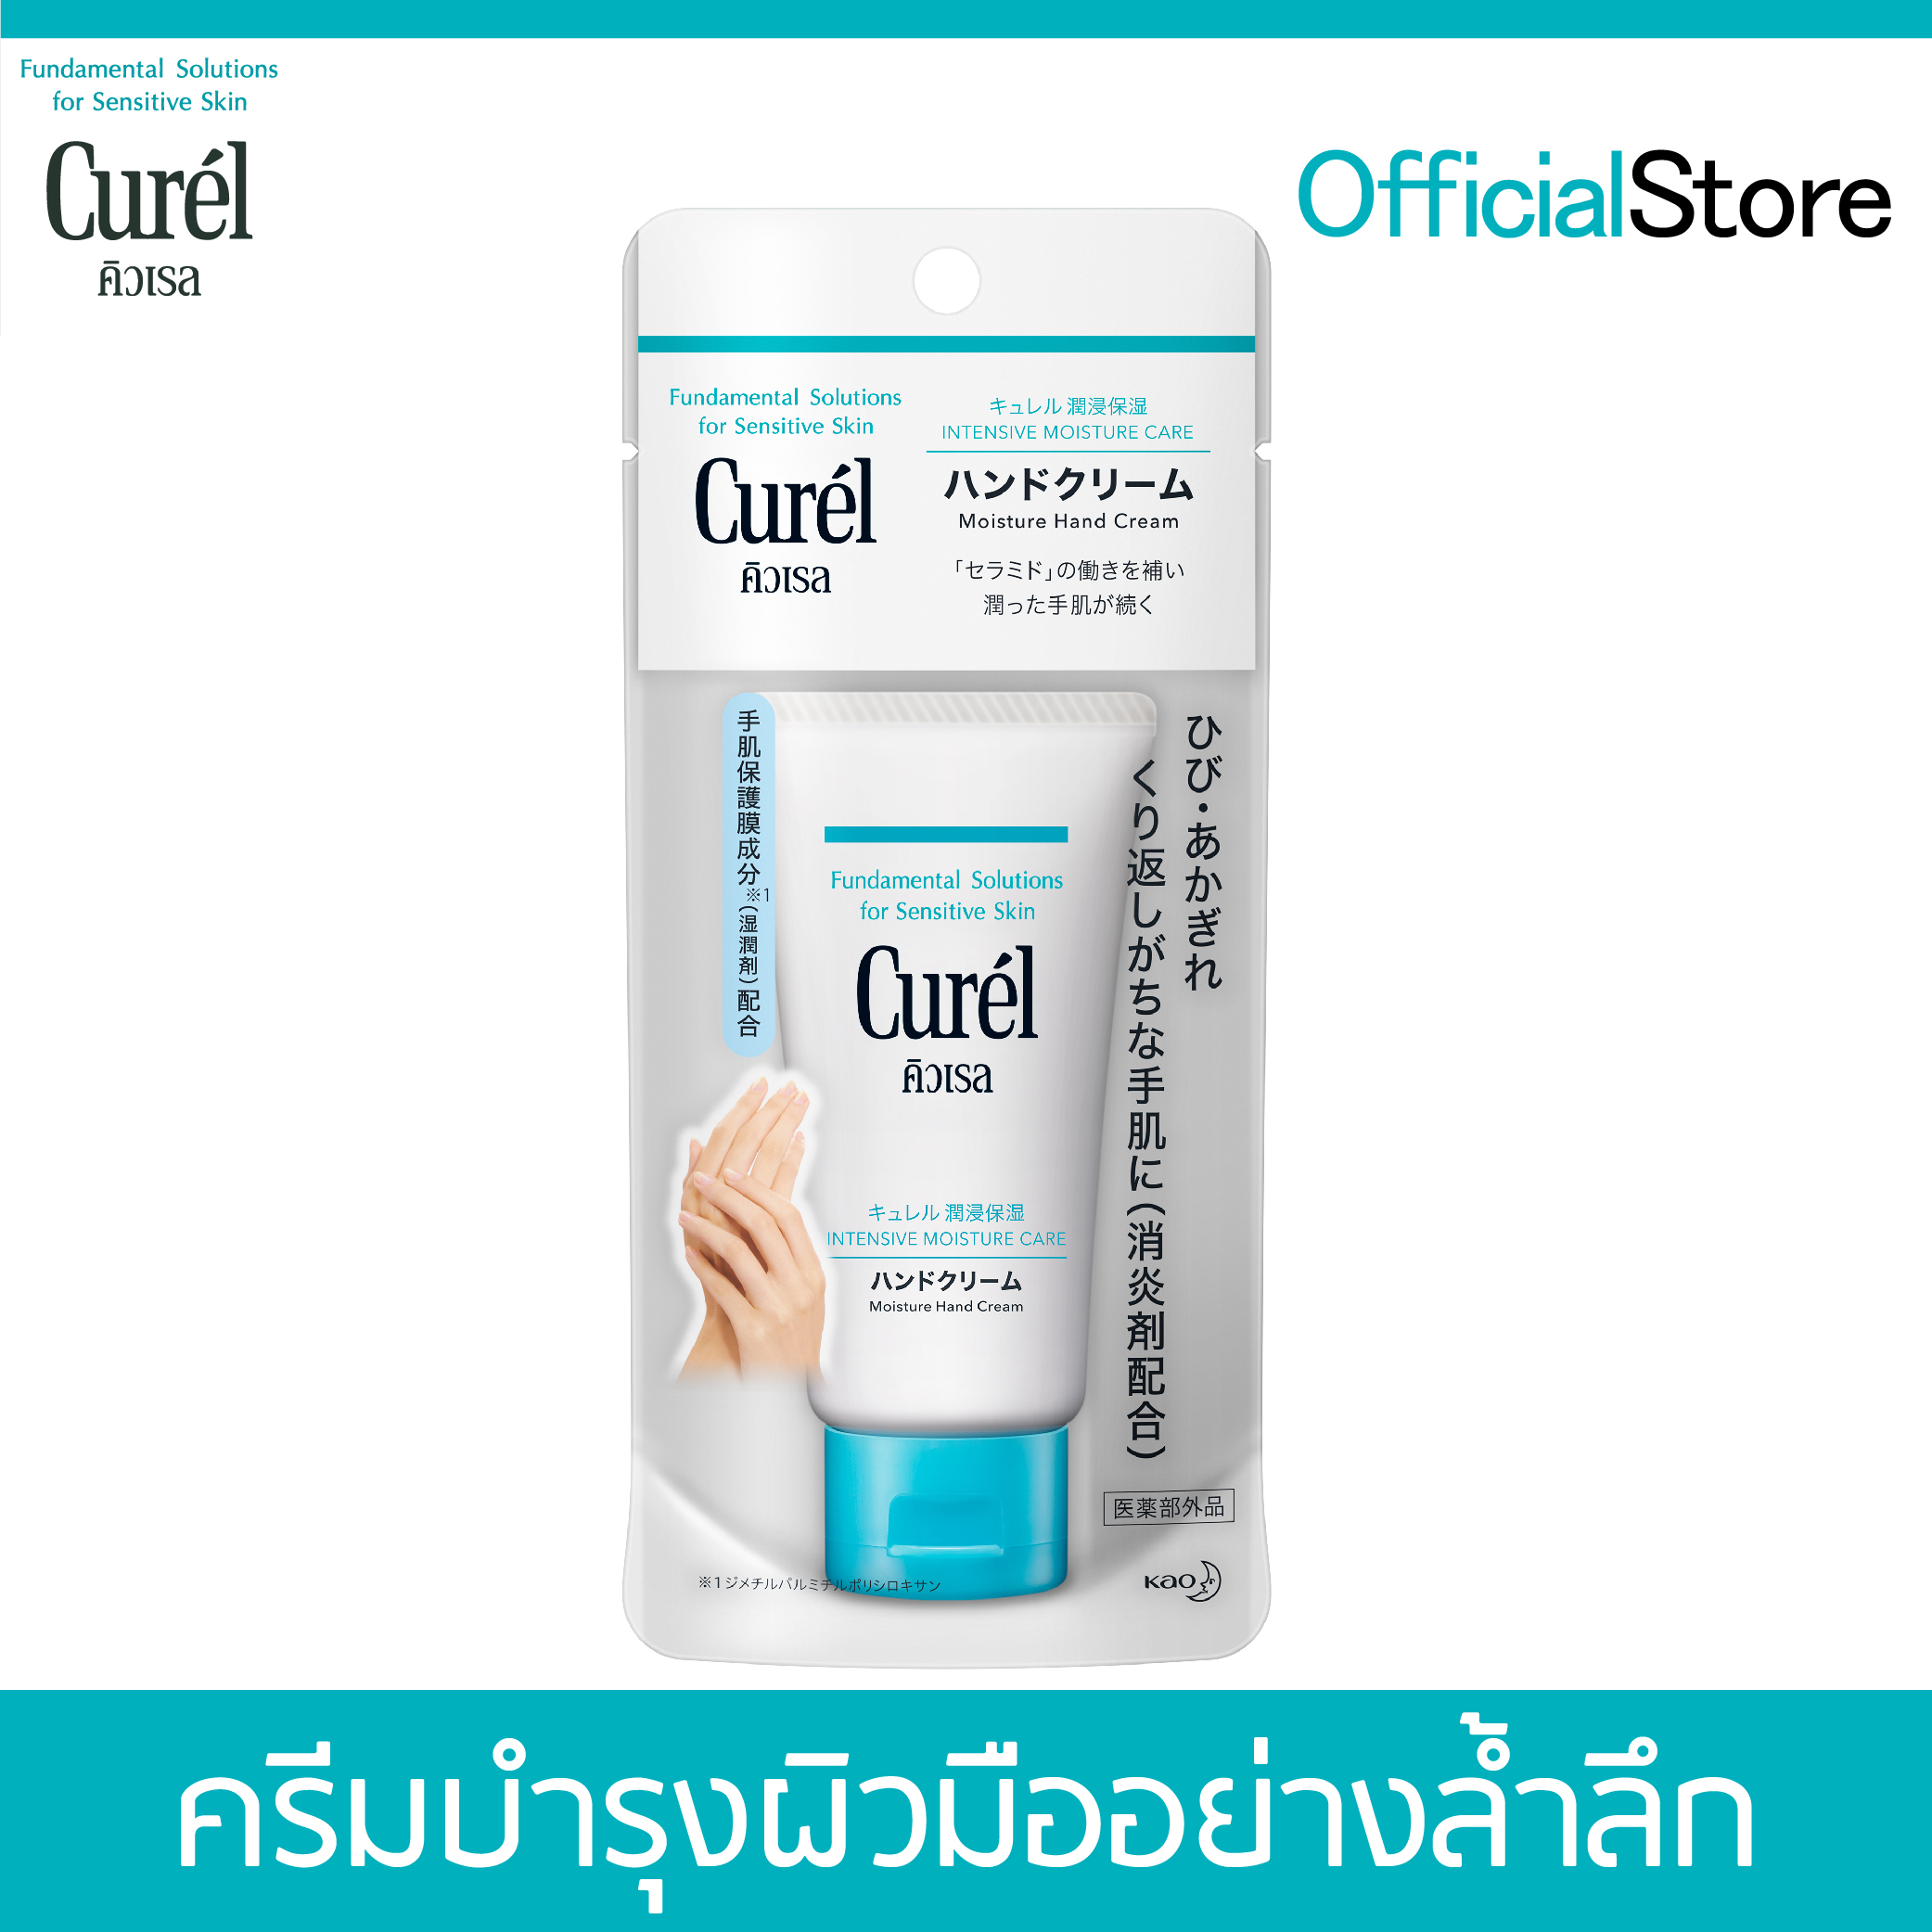 Curel INTENSIVE MOISTURE CARE Moisture Hand Cream 50g คิวเรล อินเทนซีฟ มอยส์เจอร์ แคร์ มอยส์เจอร์ แฮนด์ ครีม 50 กรัม ครีมบำรุงผิวมือ สำหรับผิวบอบบางแพ้ง่าย